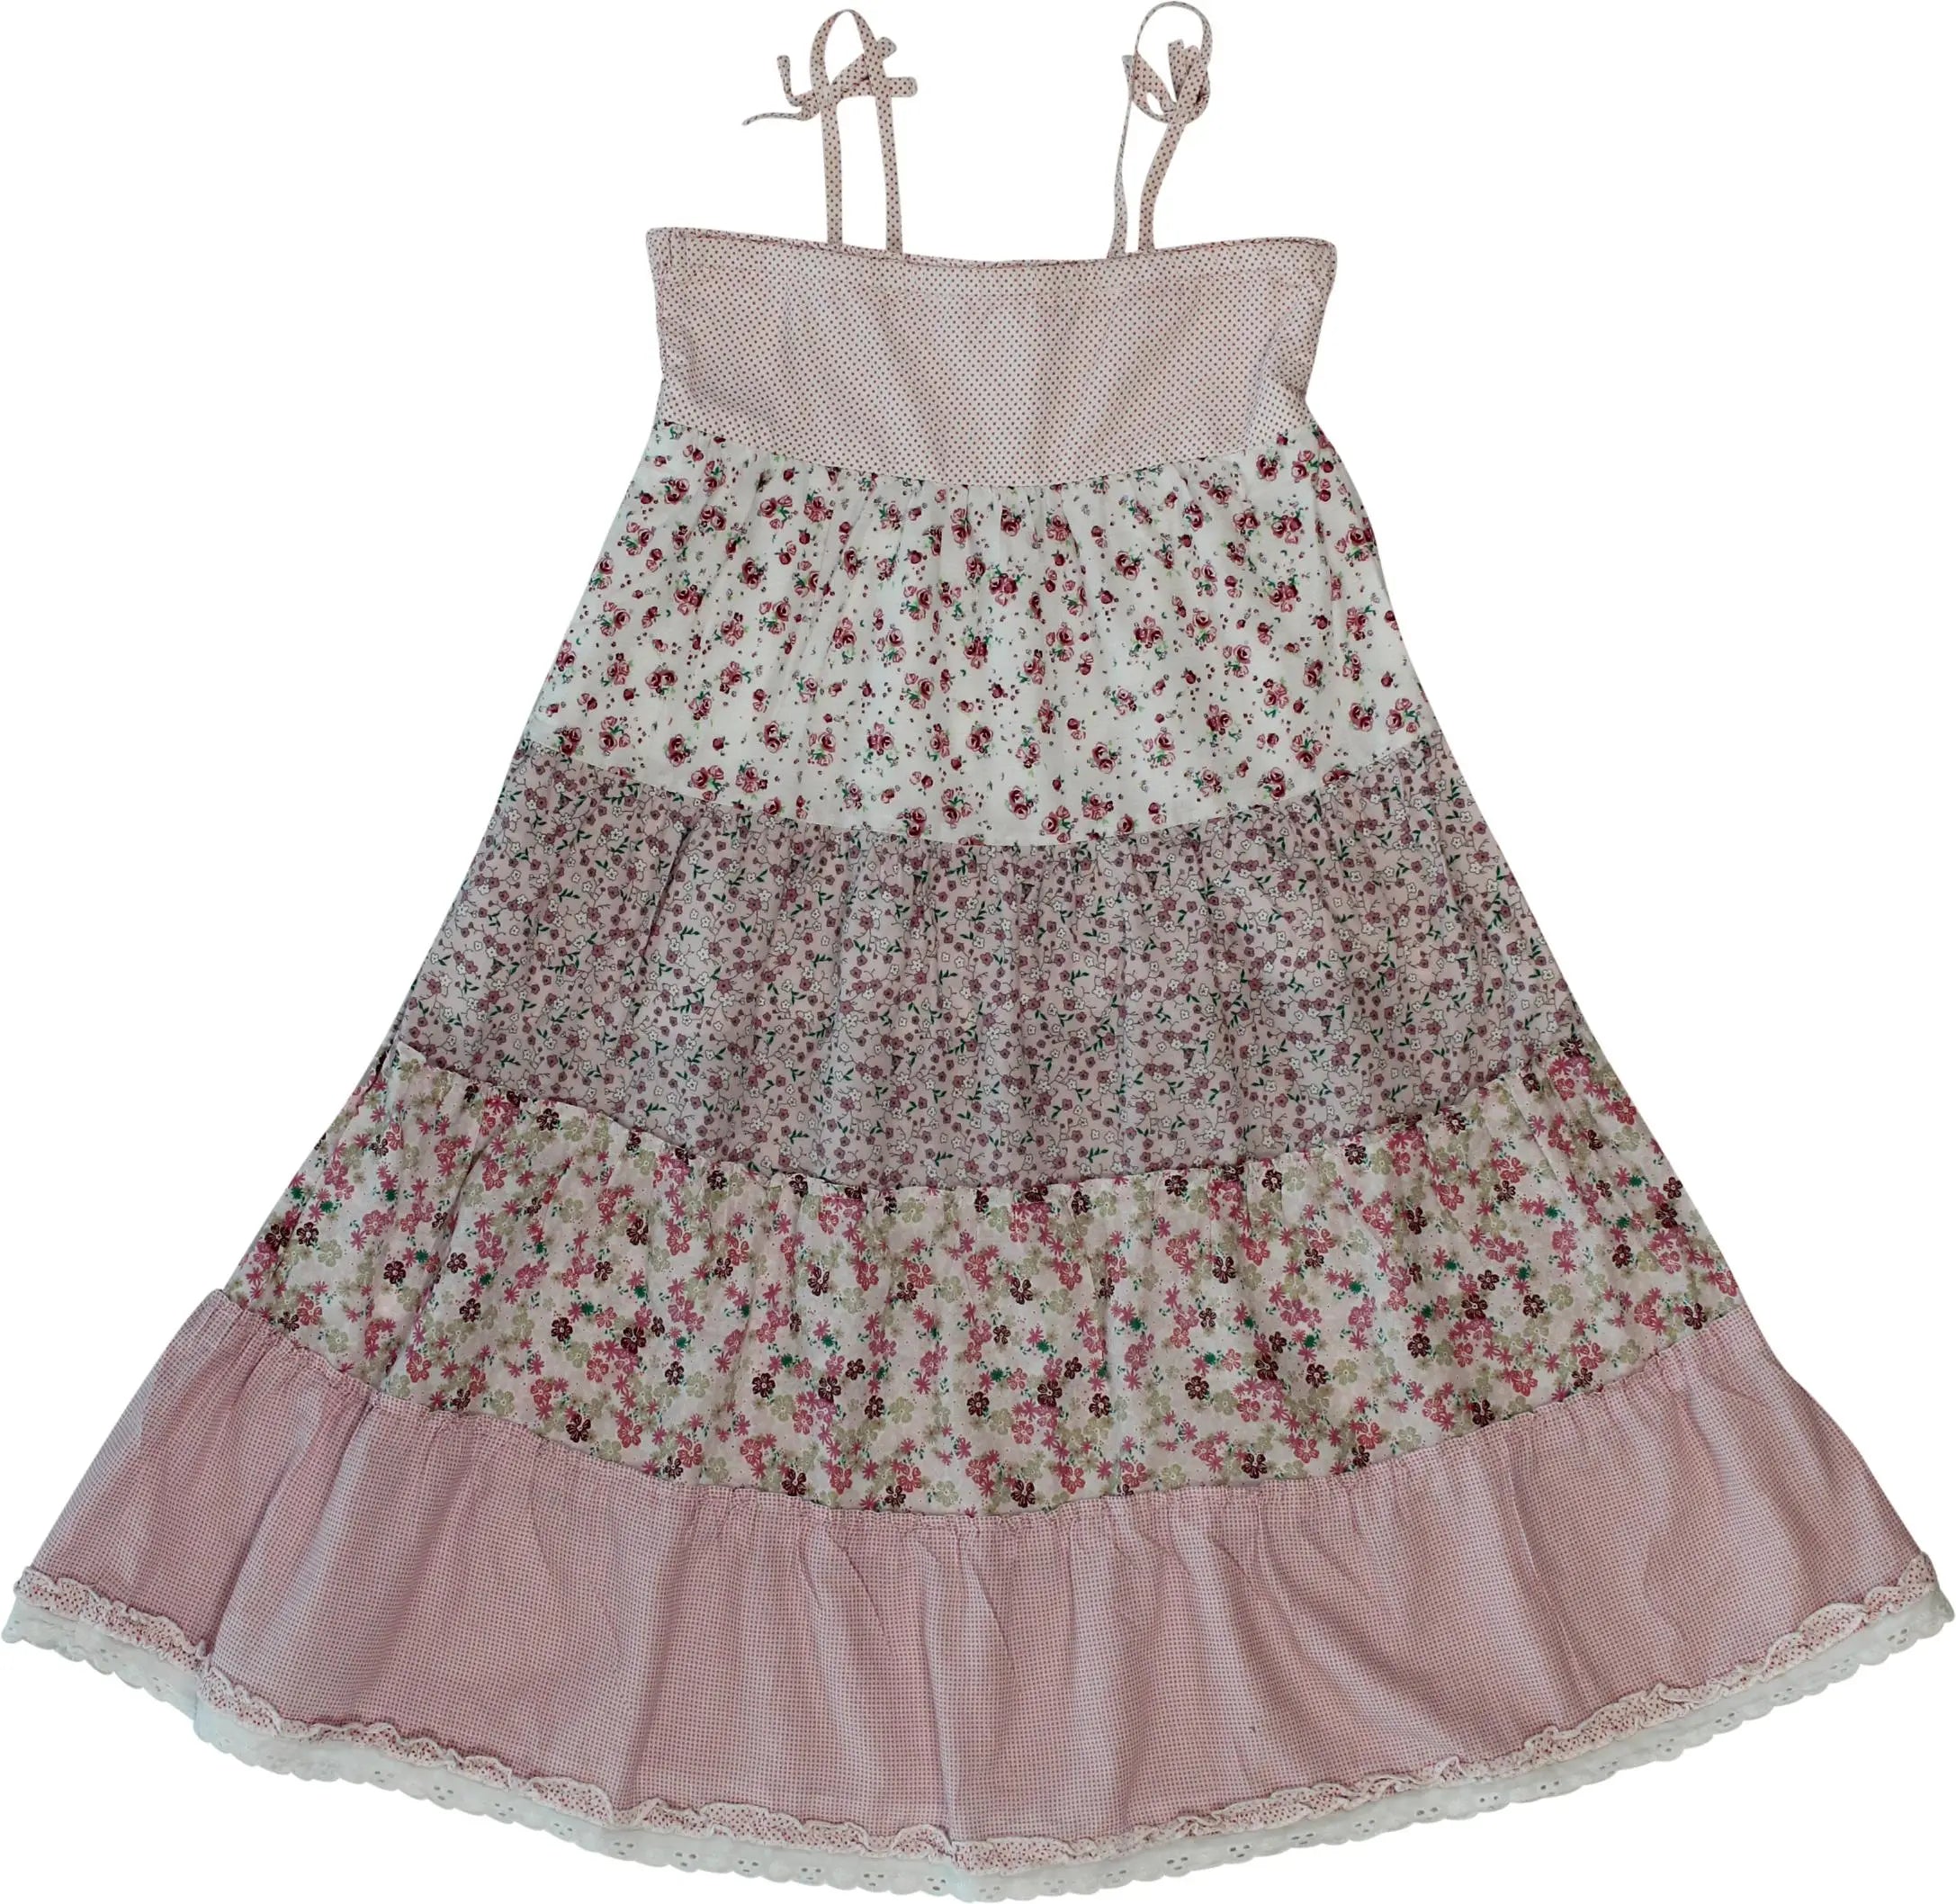 H&M - Vintage H&M Dress- ThriftTale.com - Vintage and second handclothing